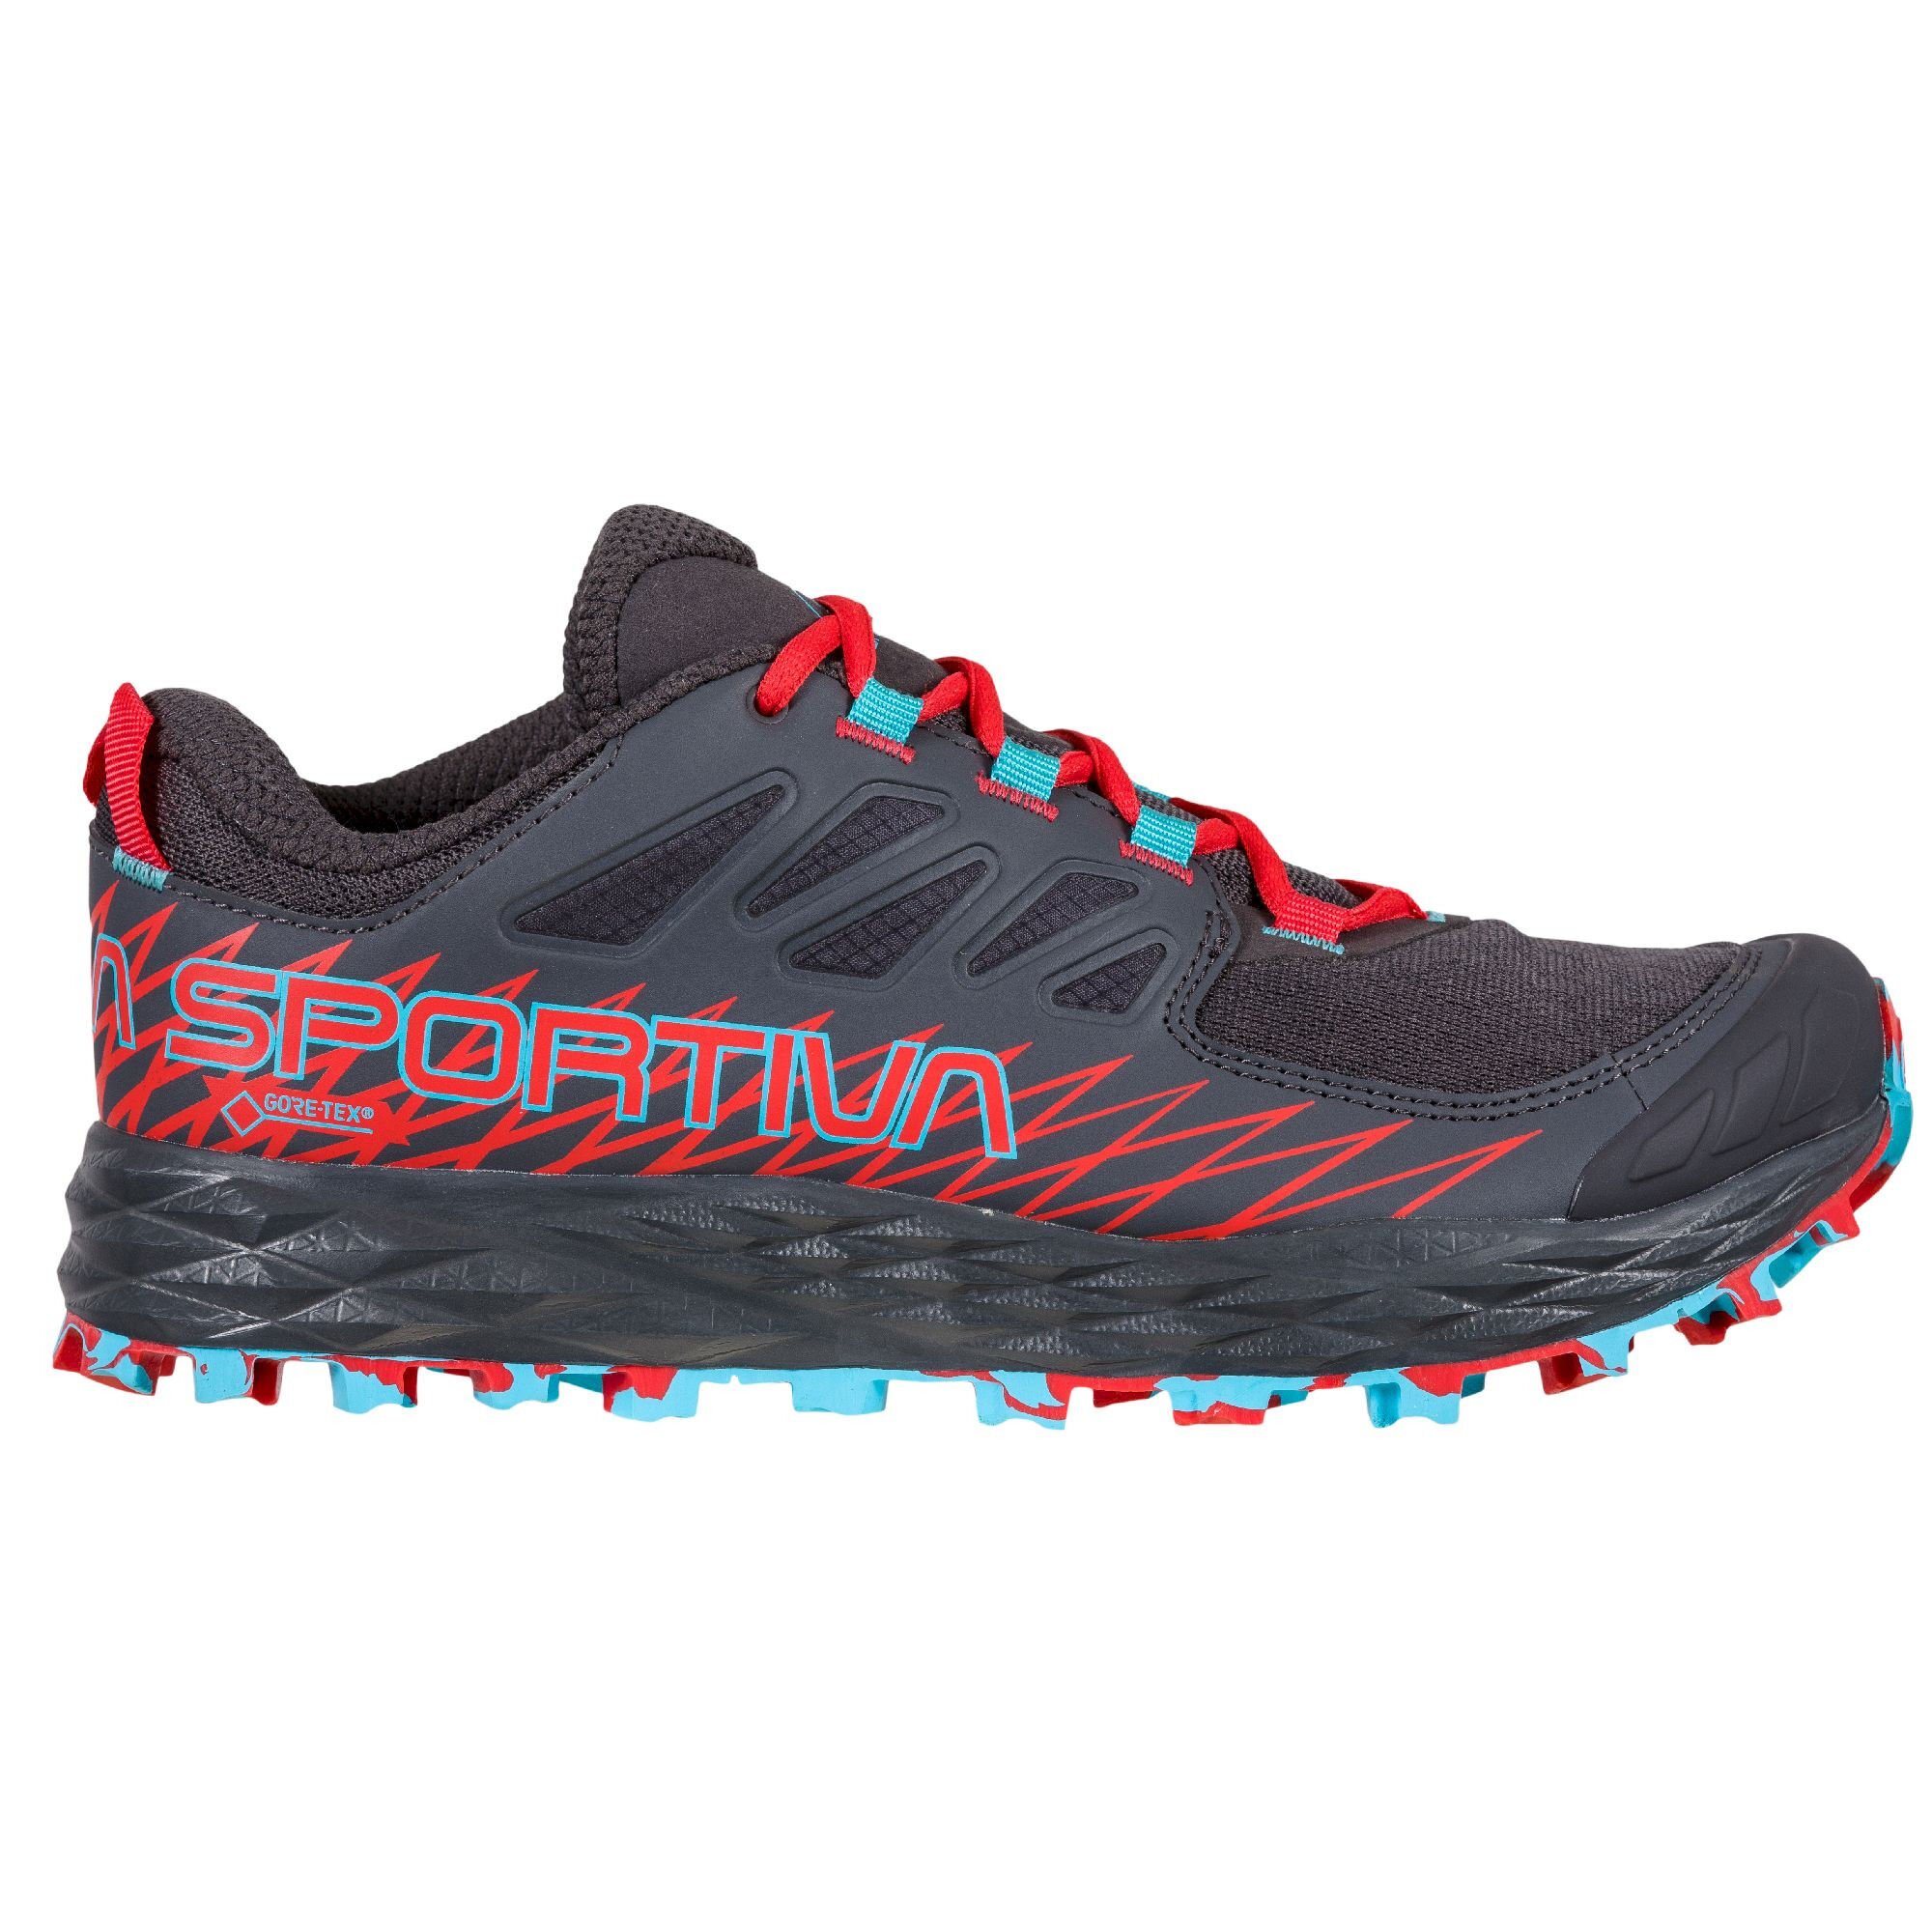 La Sportiva - Lycan Woman GTX - Trail Running shoes - Women's